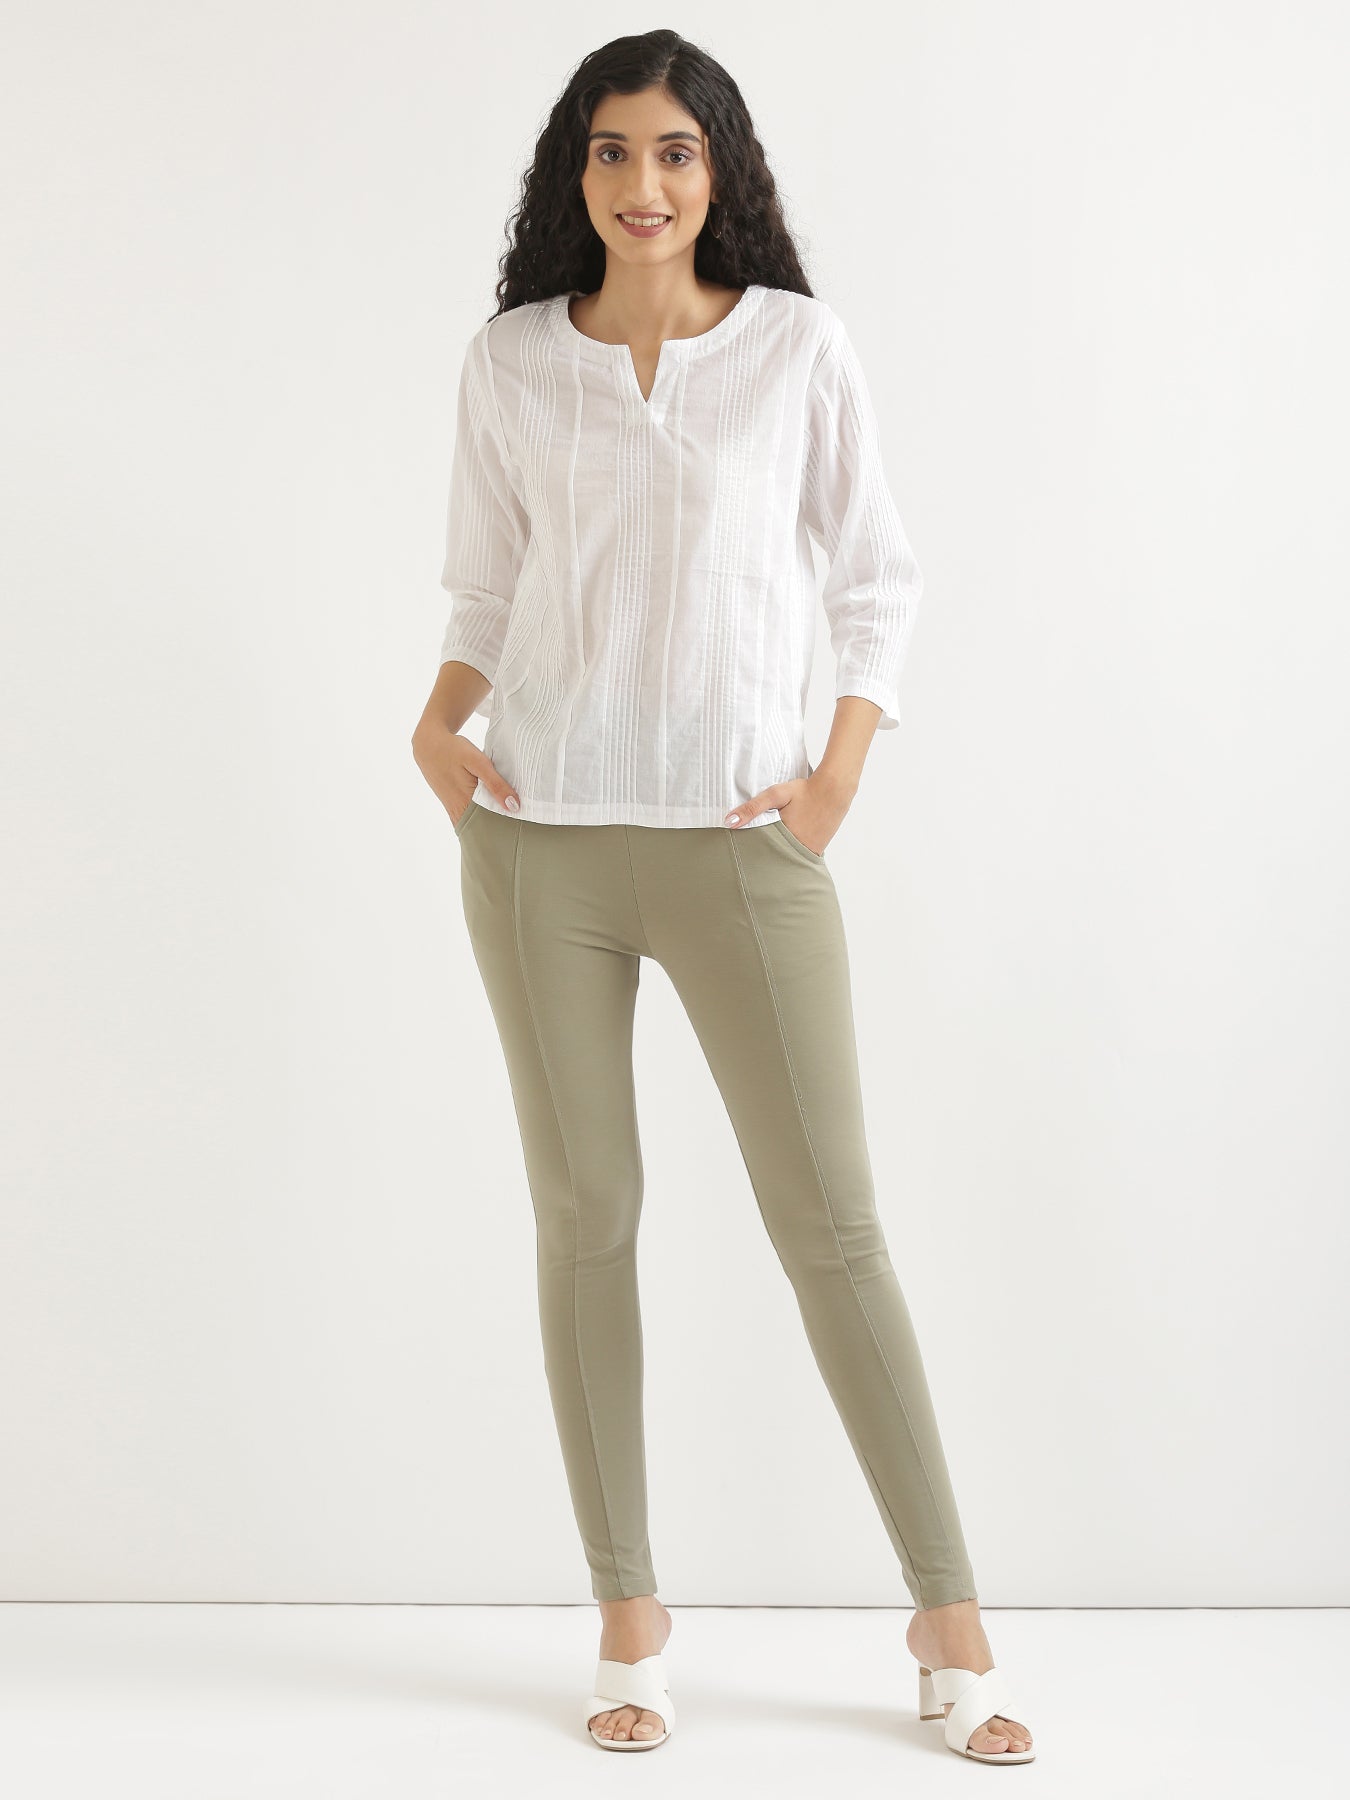 Mint Green 4-Way Stretchable Pants